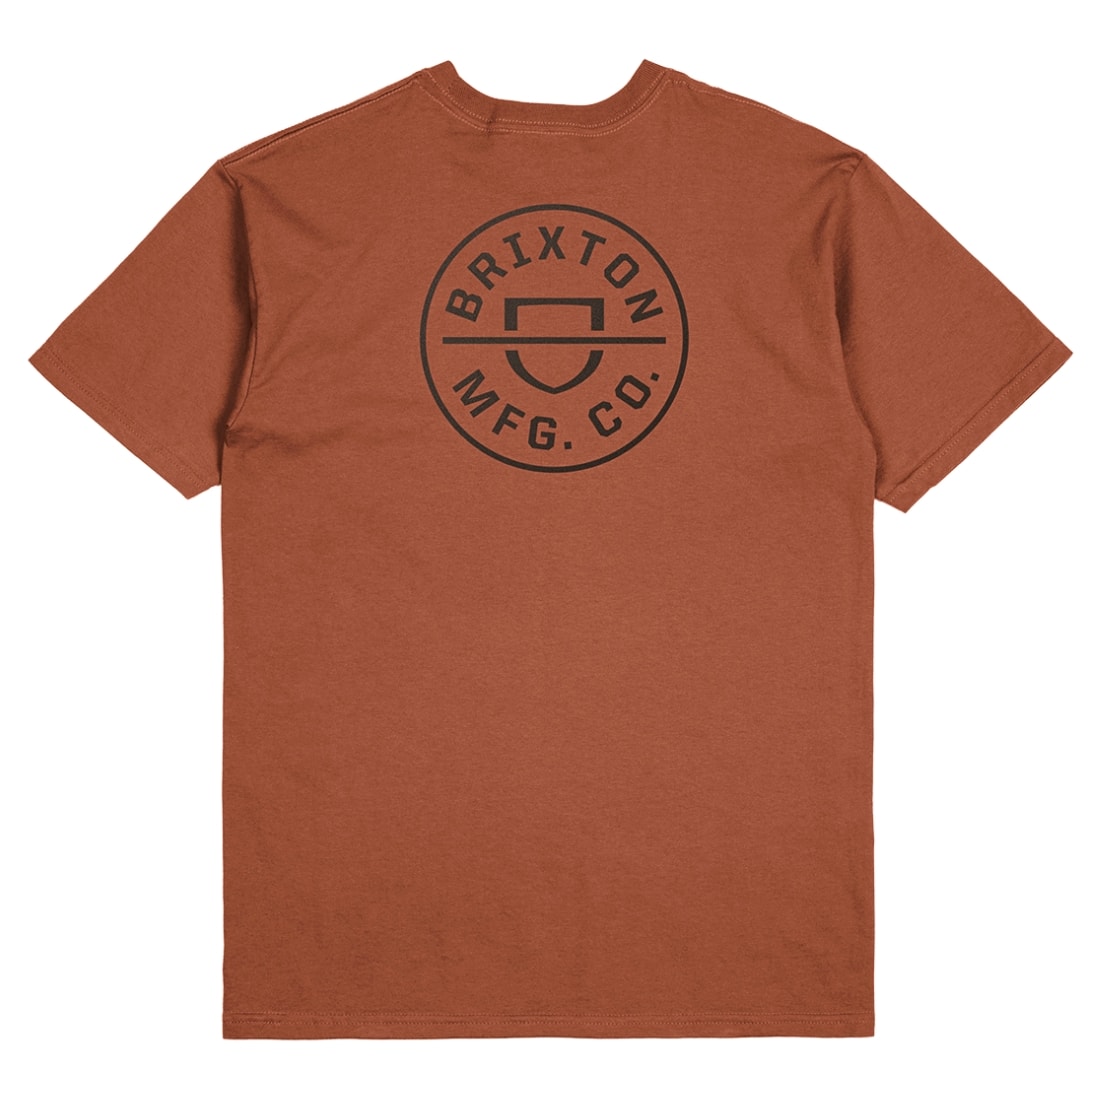 Brixton Crest II T-Shirt - Terracotta/Washed Black - Mens Skate Brand T-Shirt by Brixton